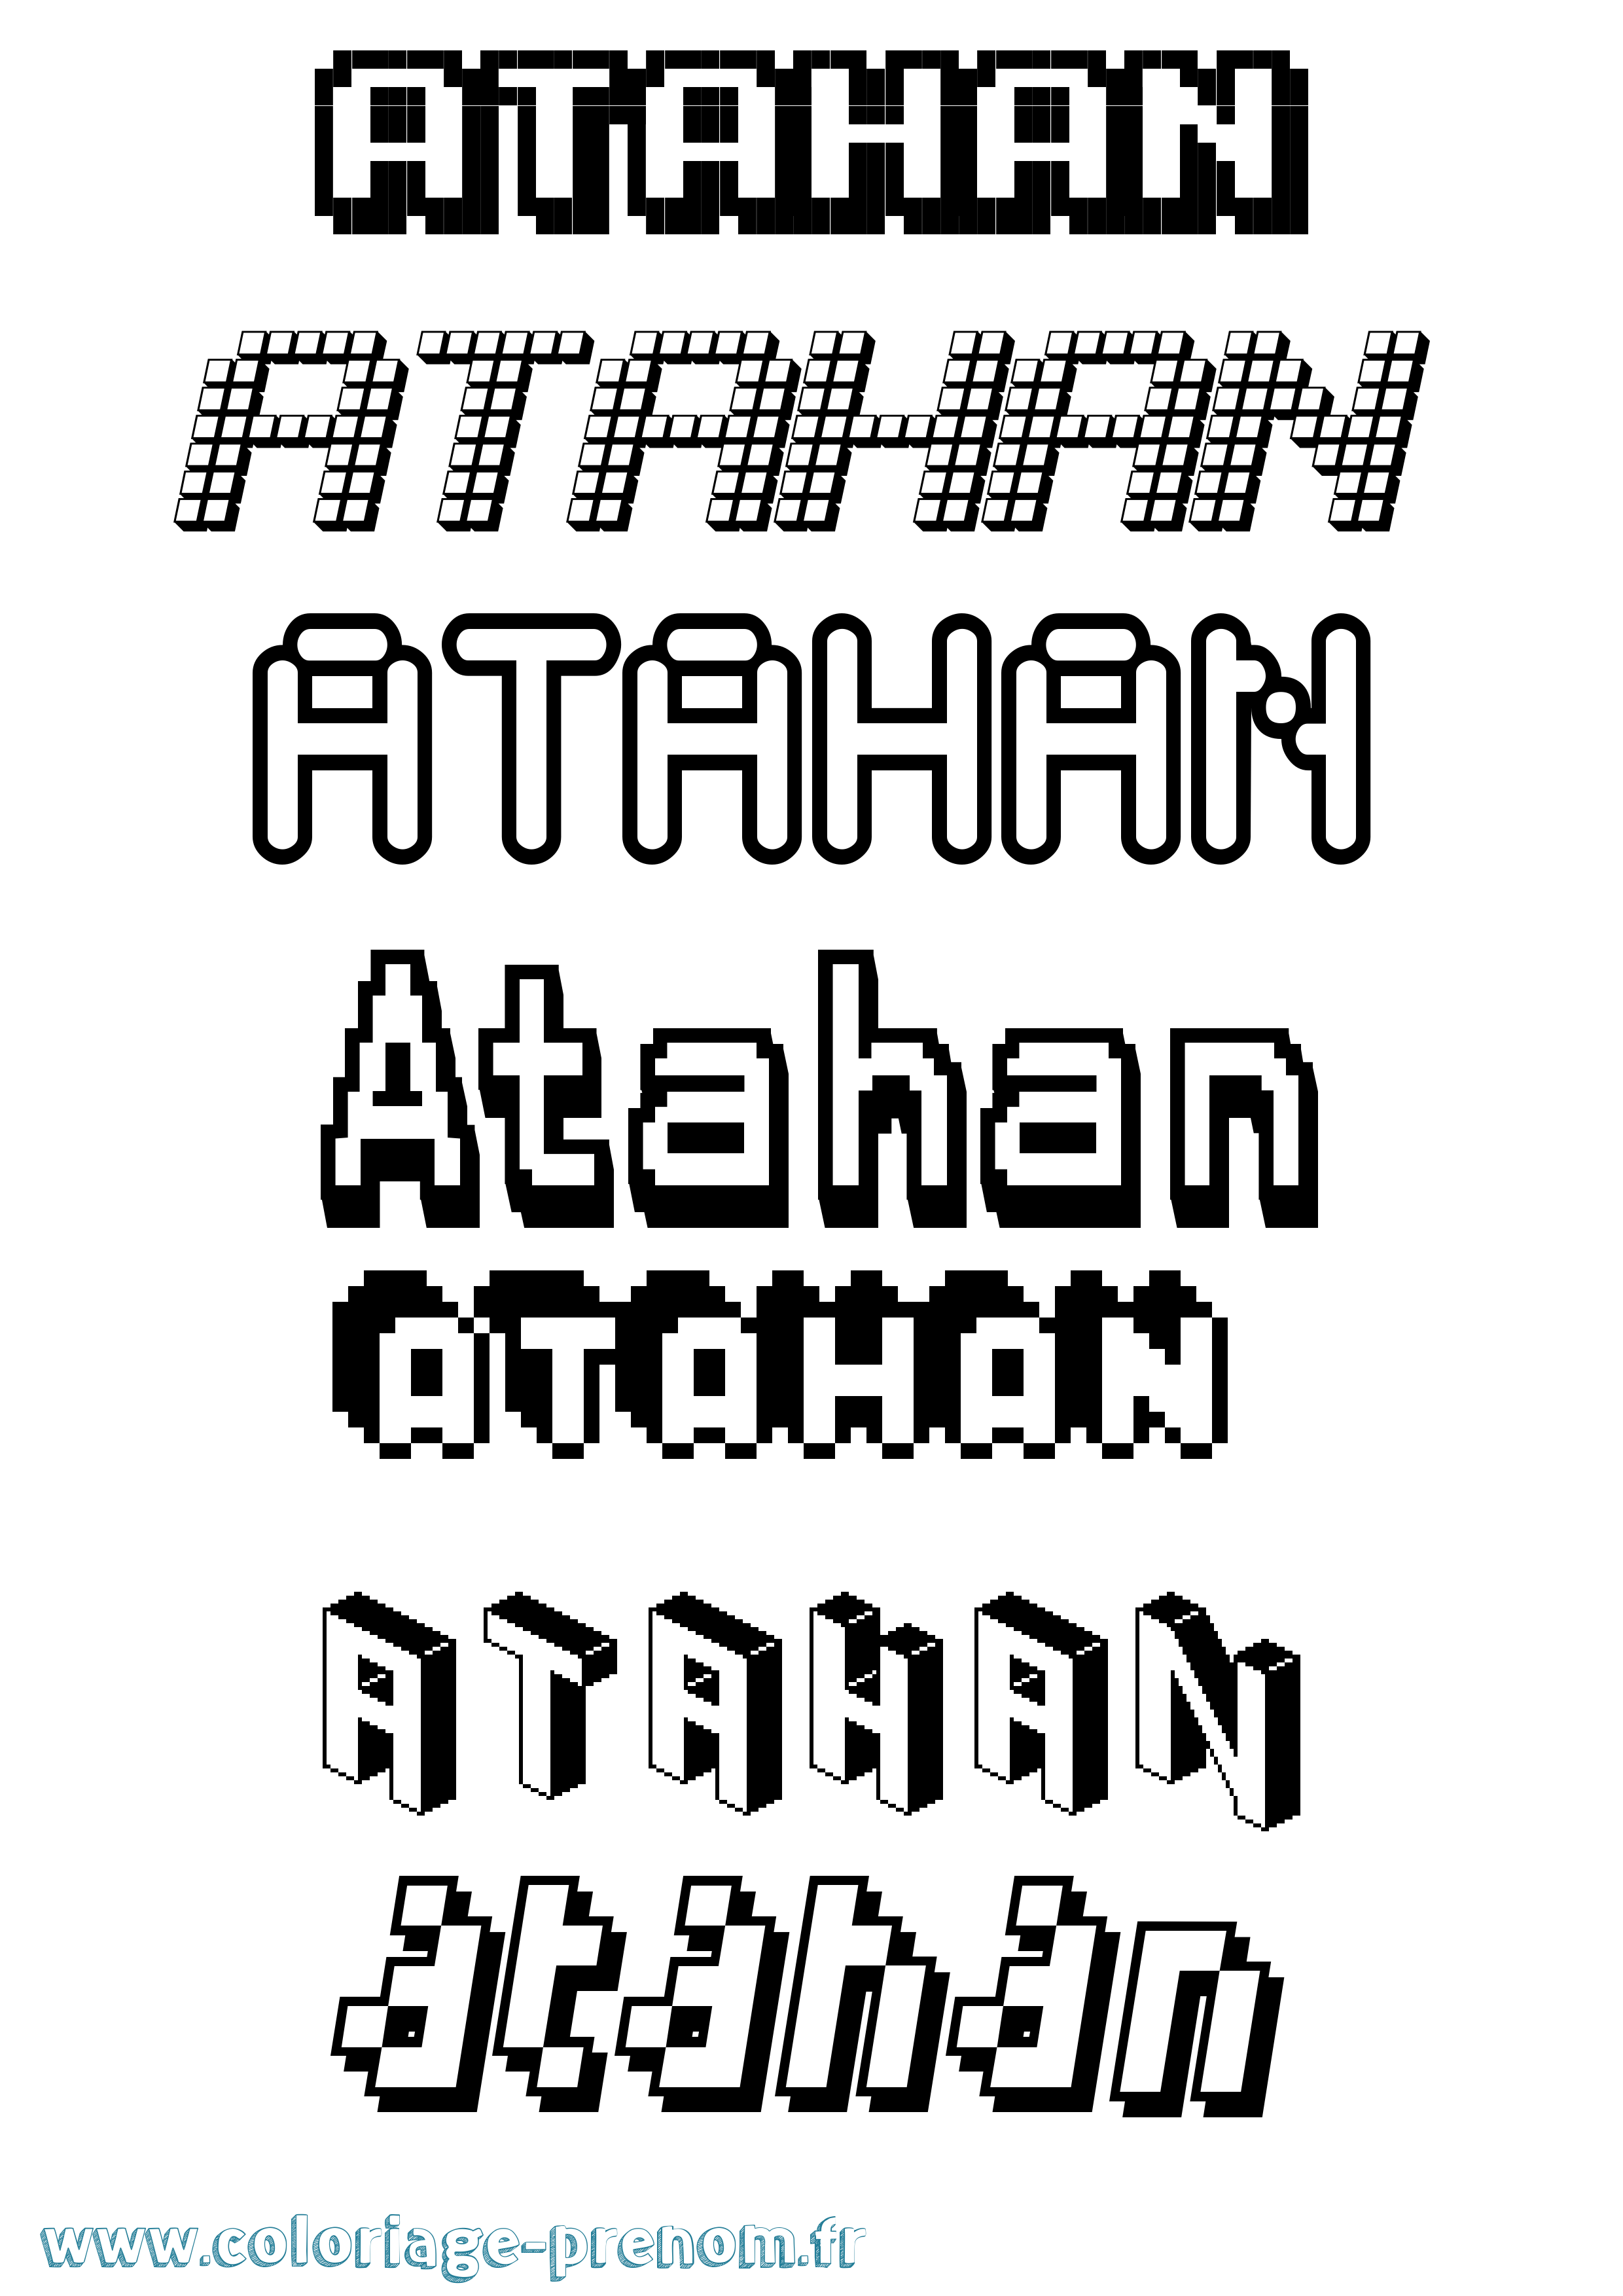 Coloriage prénom Atahan Pixel